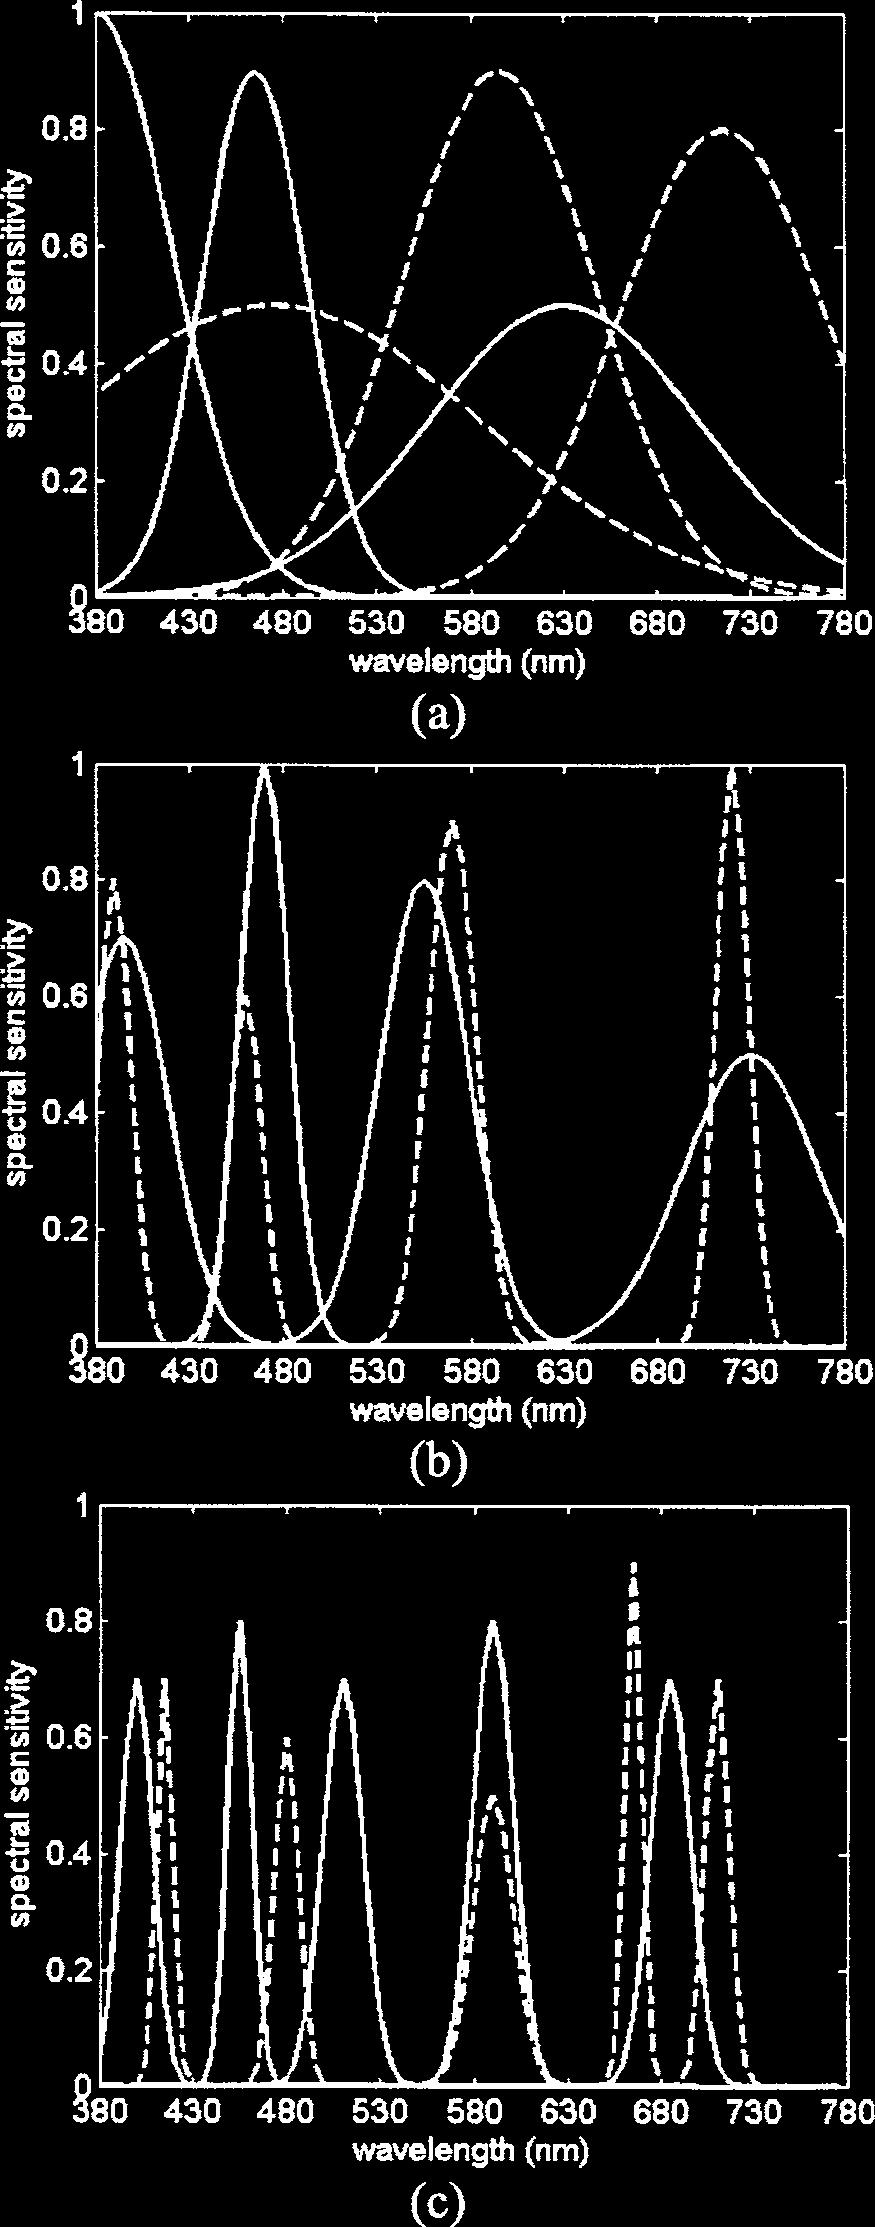 López-Álvarez et al. Vol. 24, No. 4/April 2007/J. Opt. Soc. Am. A 947 sensitivity found by decreasing m was a small sharpening.